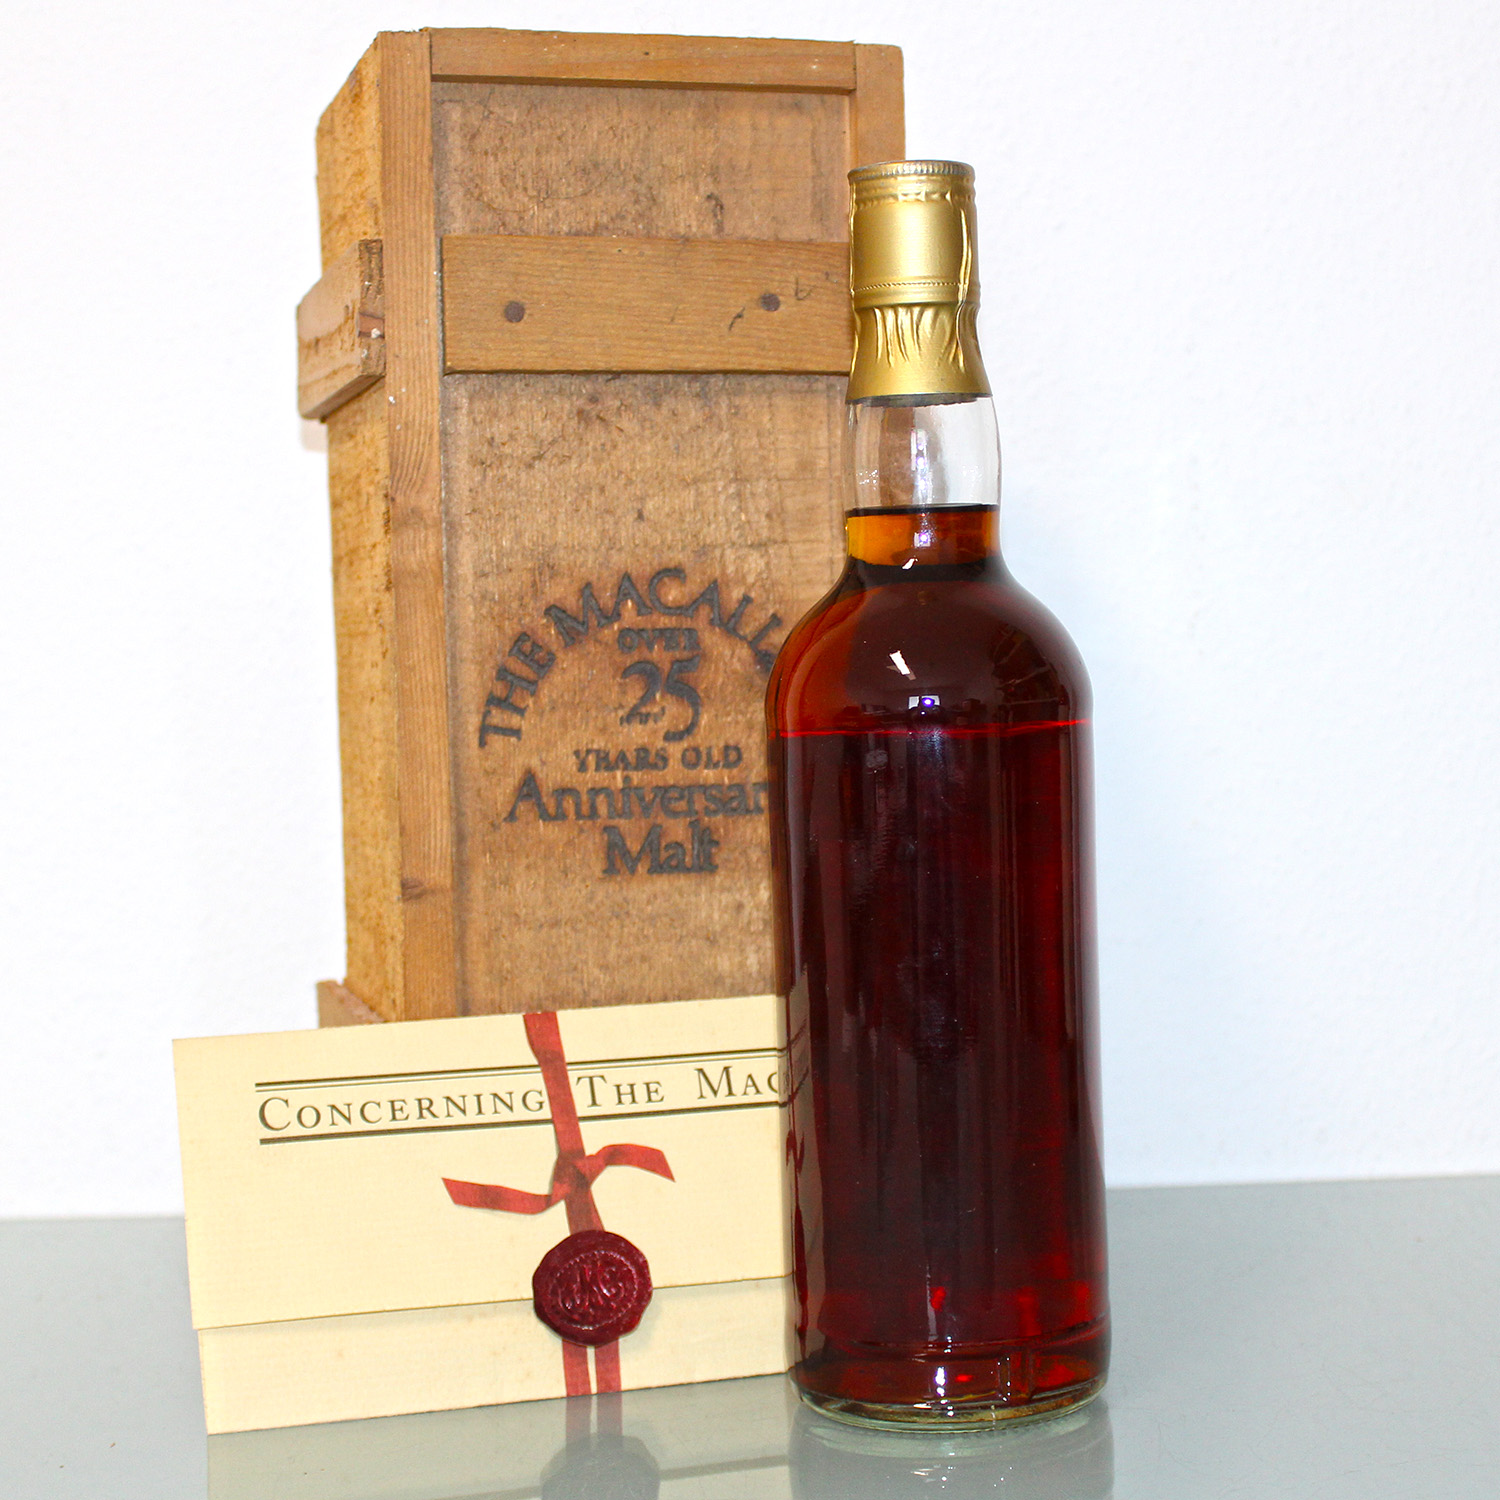 Macallan 1958 Anniversary Malt 25 Years Whisky Back Box